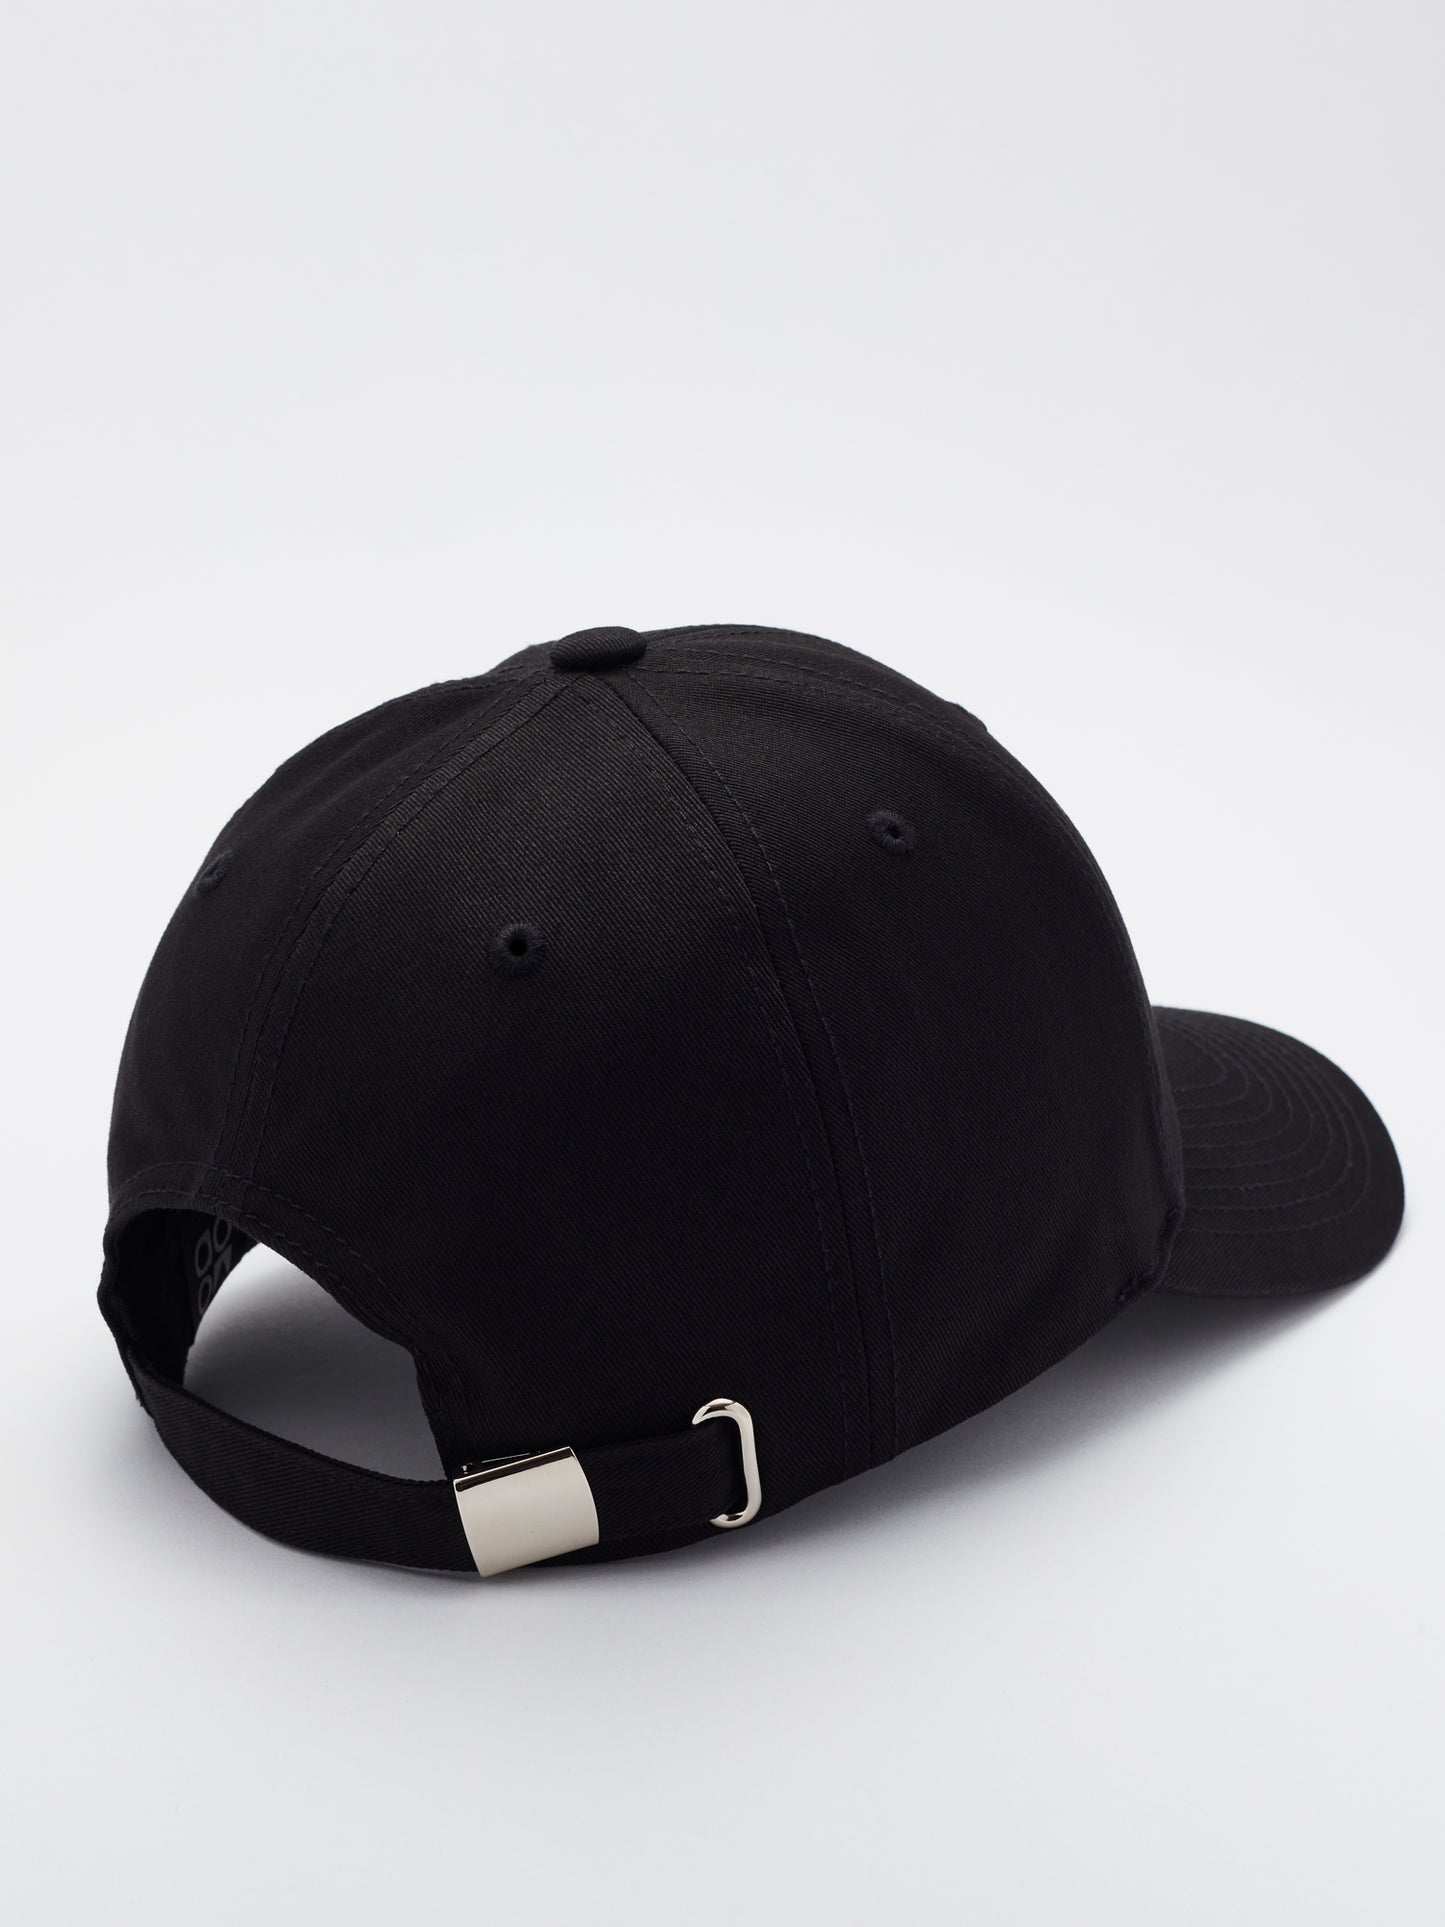 MOOD Shroom baseball cap in black - Back view